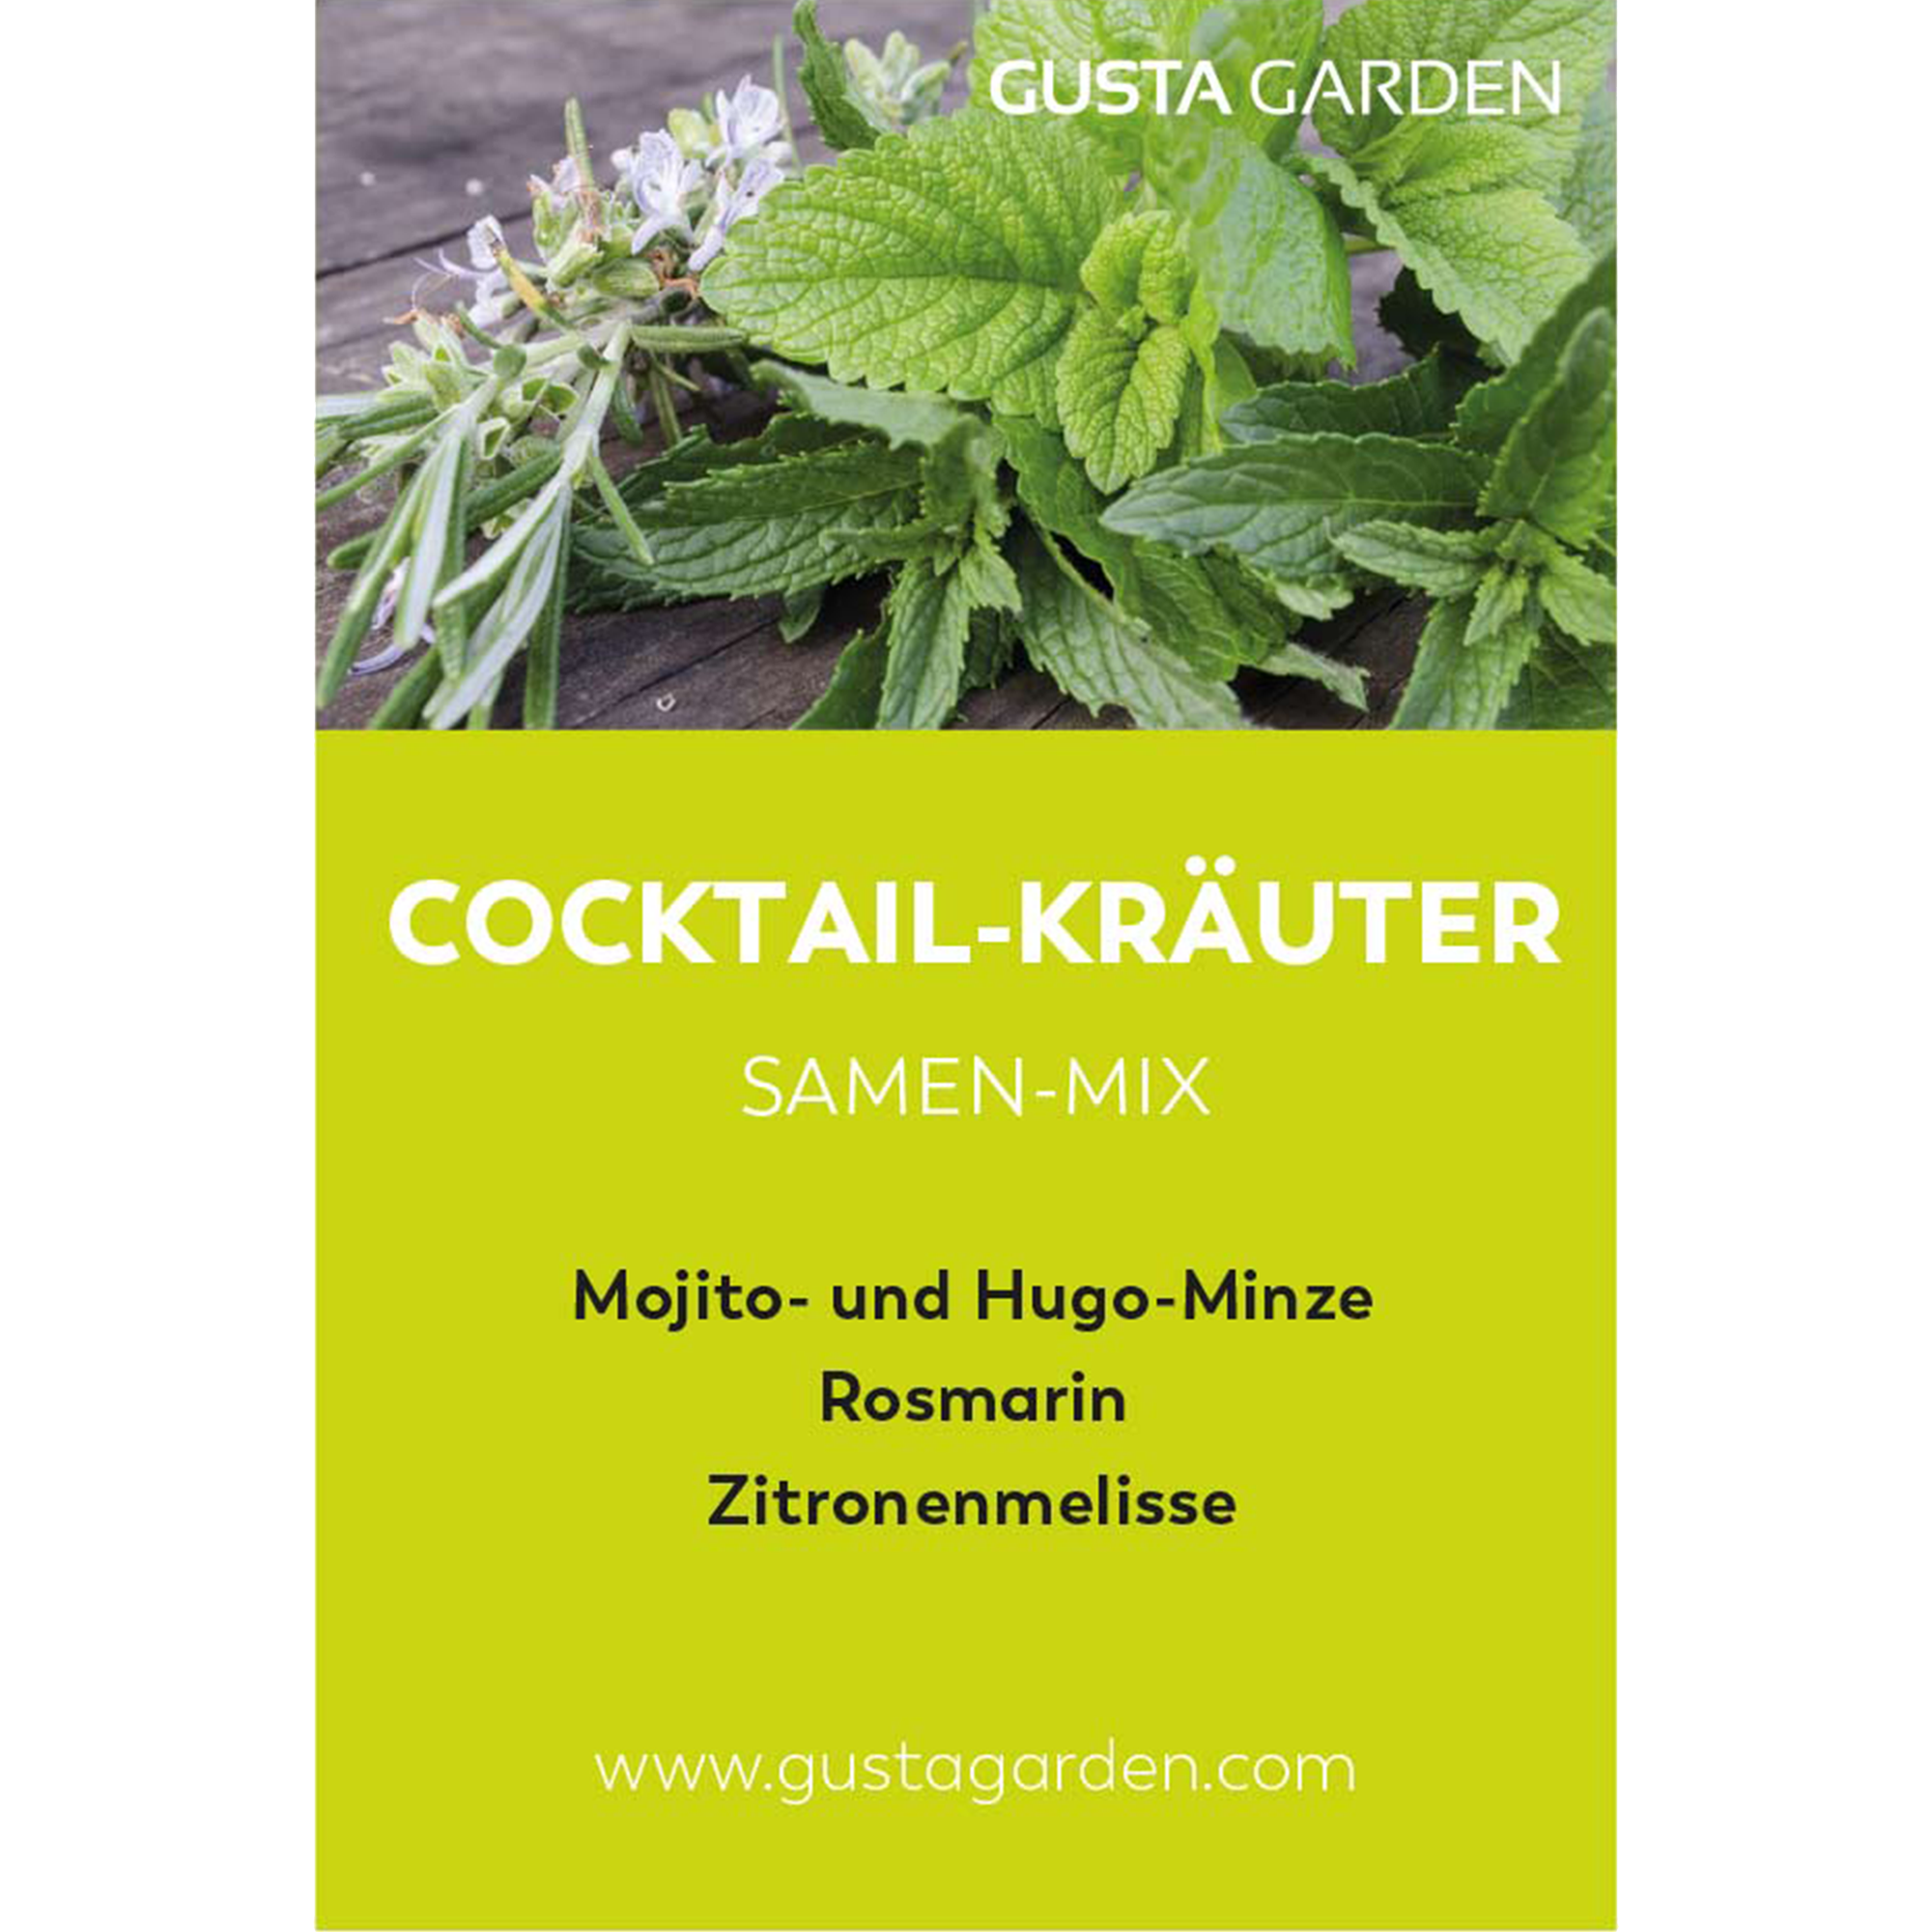 Cocktail-Kräuter Samen-Mix